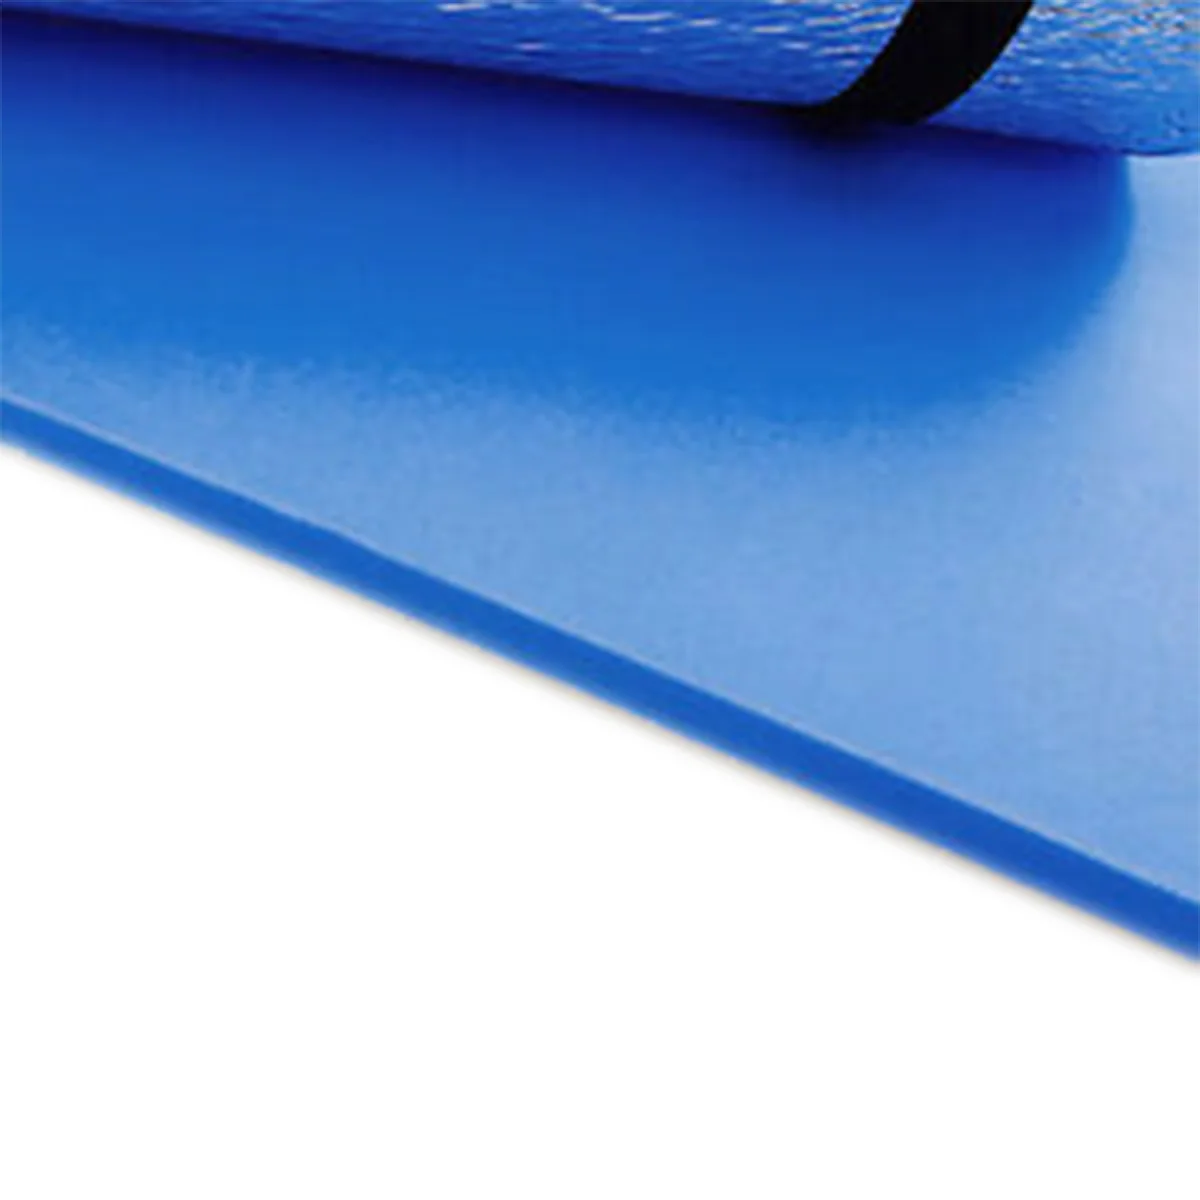 Moisture-proof, non-slip, easy to clean, soft yoga mat, Pilates stretching exercise mat, 180 cm x 50 cm x 0.6 cm